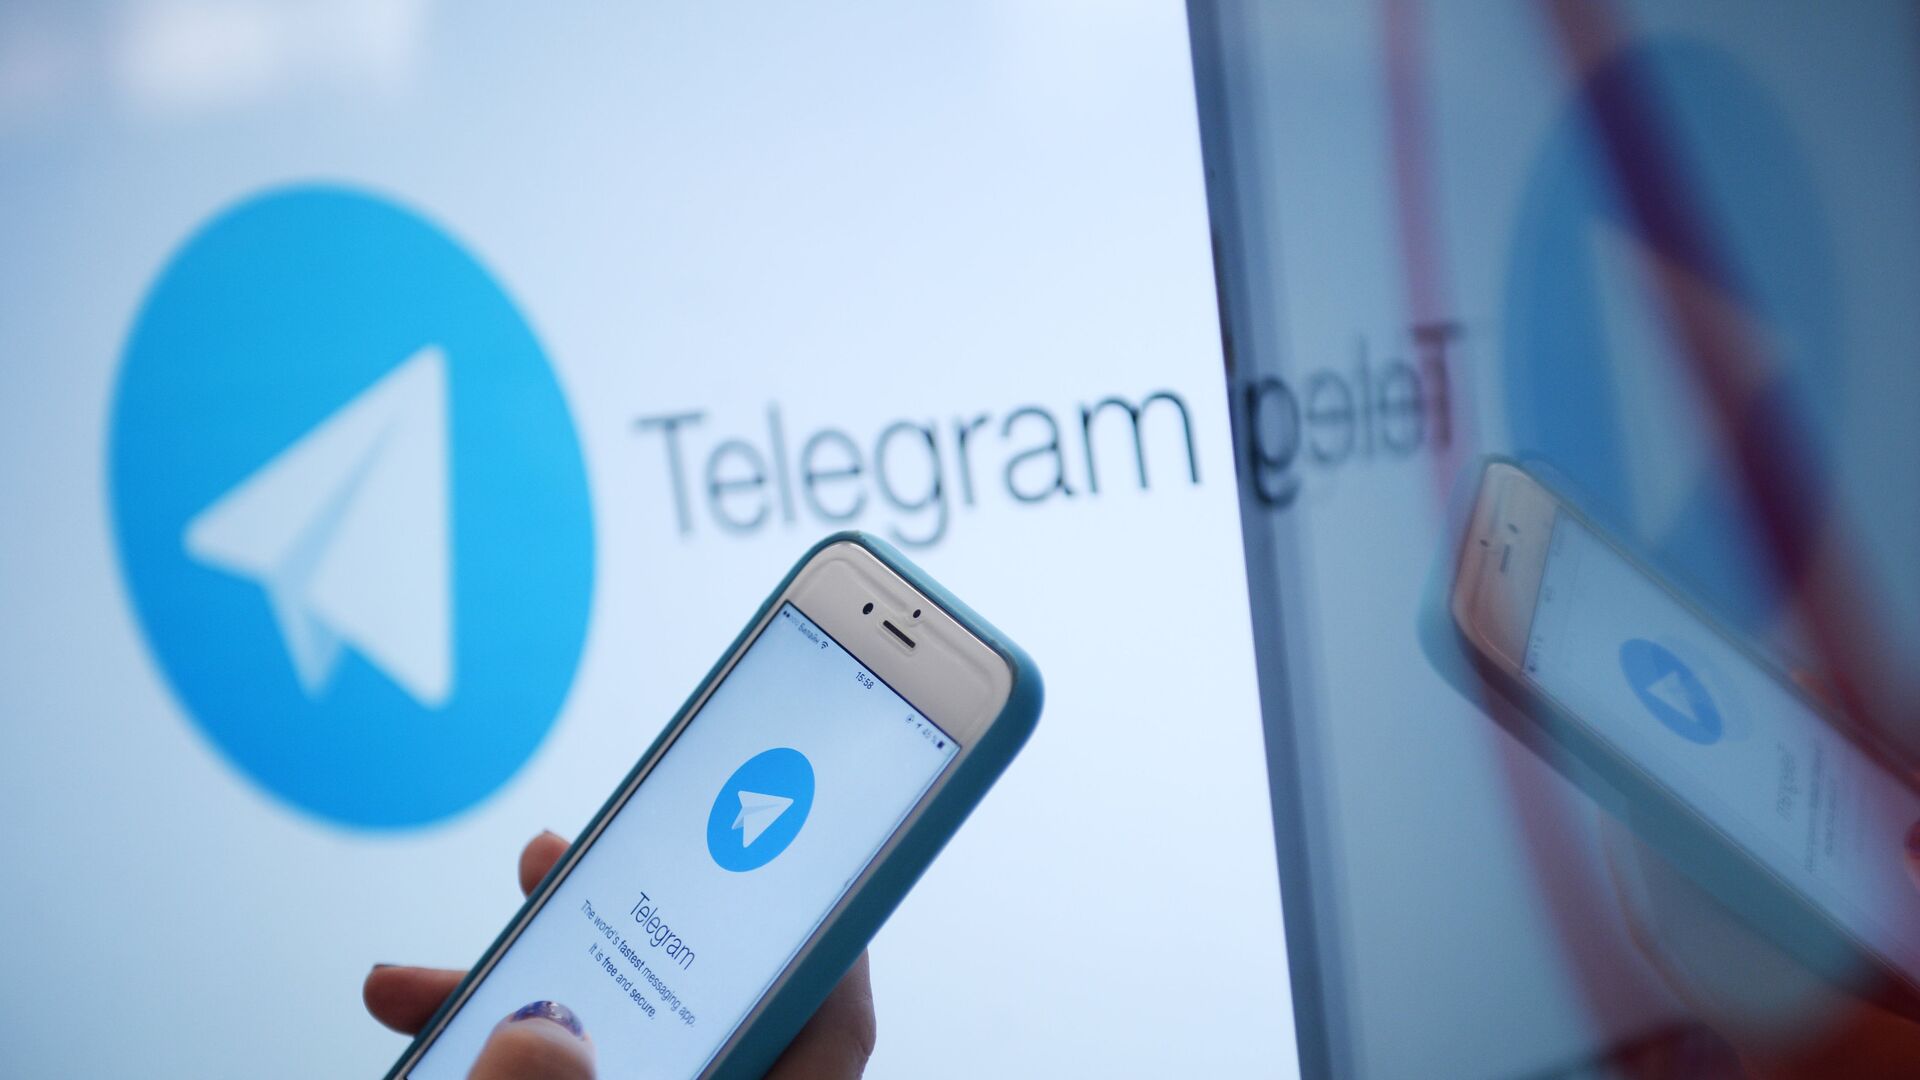 Логотип мессенджера Telegram на экране монитора и телефона - РИА Новости, 1920, 09.01.2021